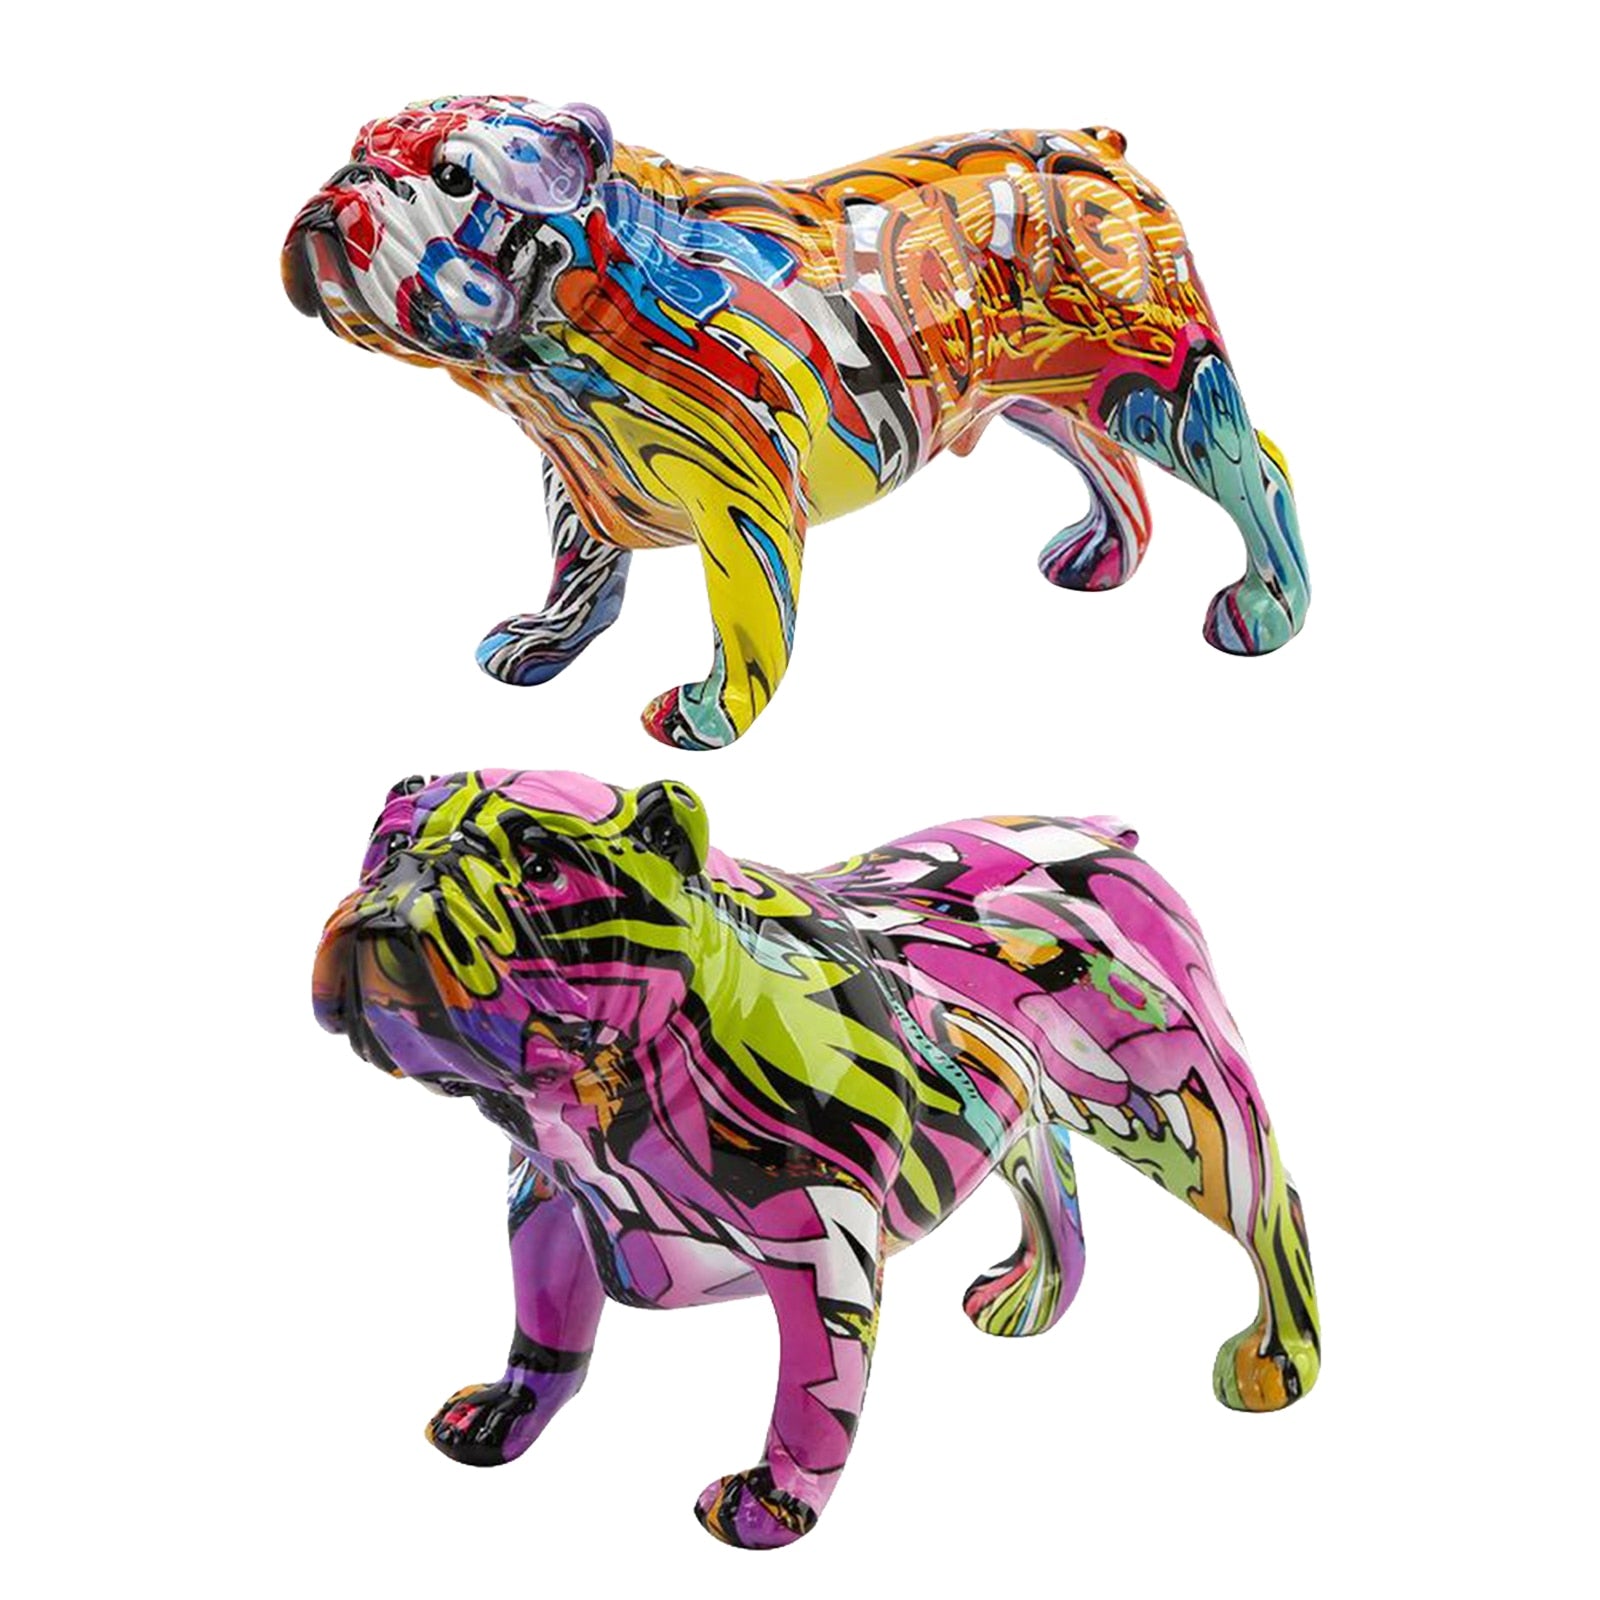 Graffiti Bulldog Figurines Resin